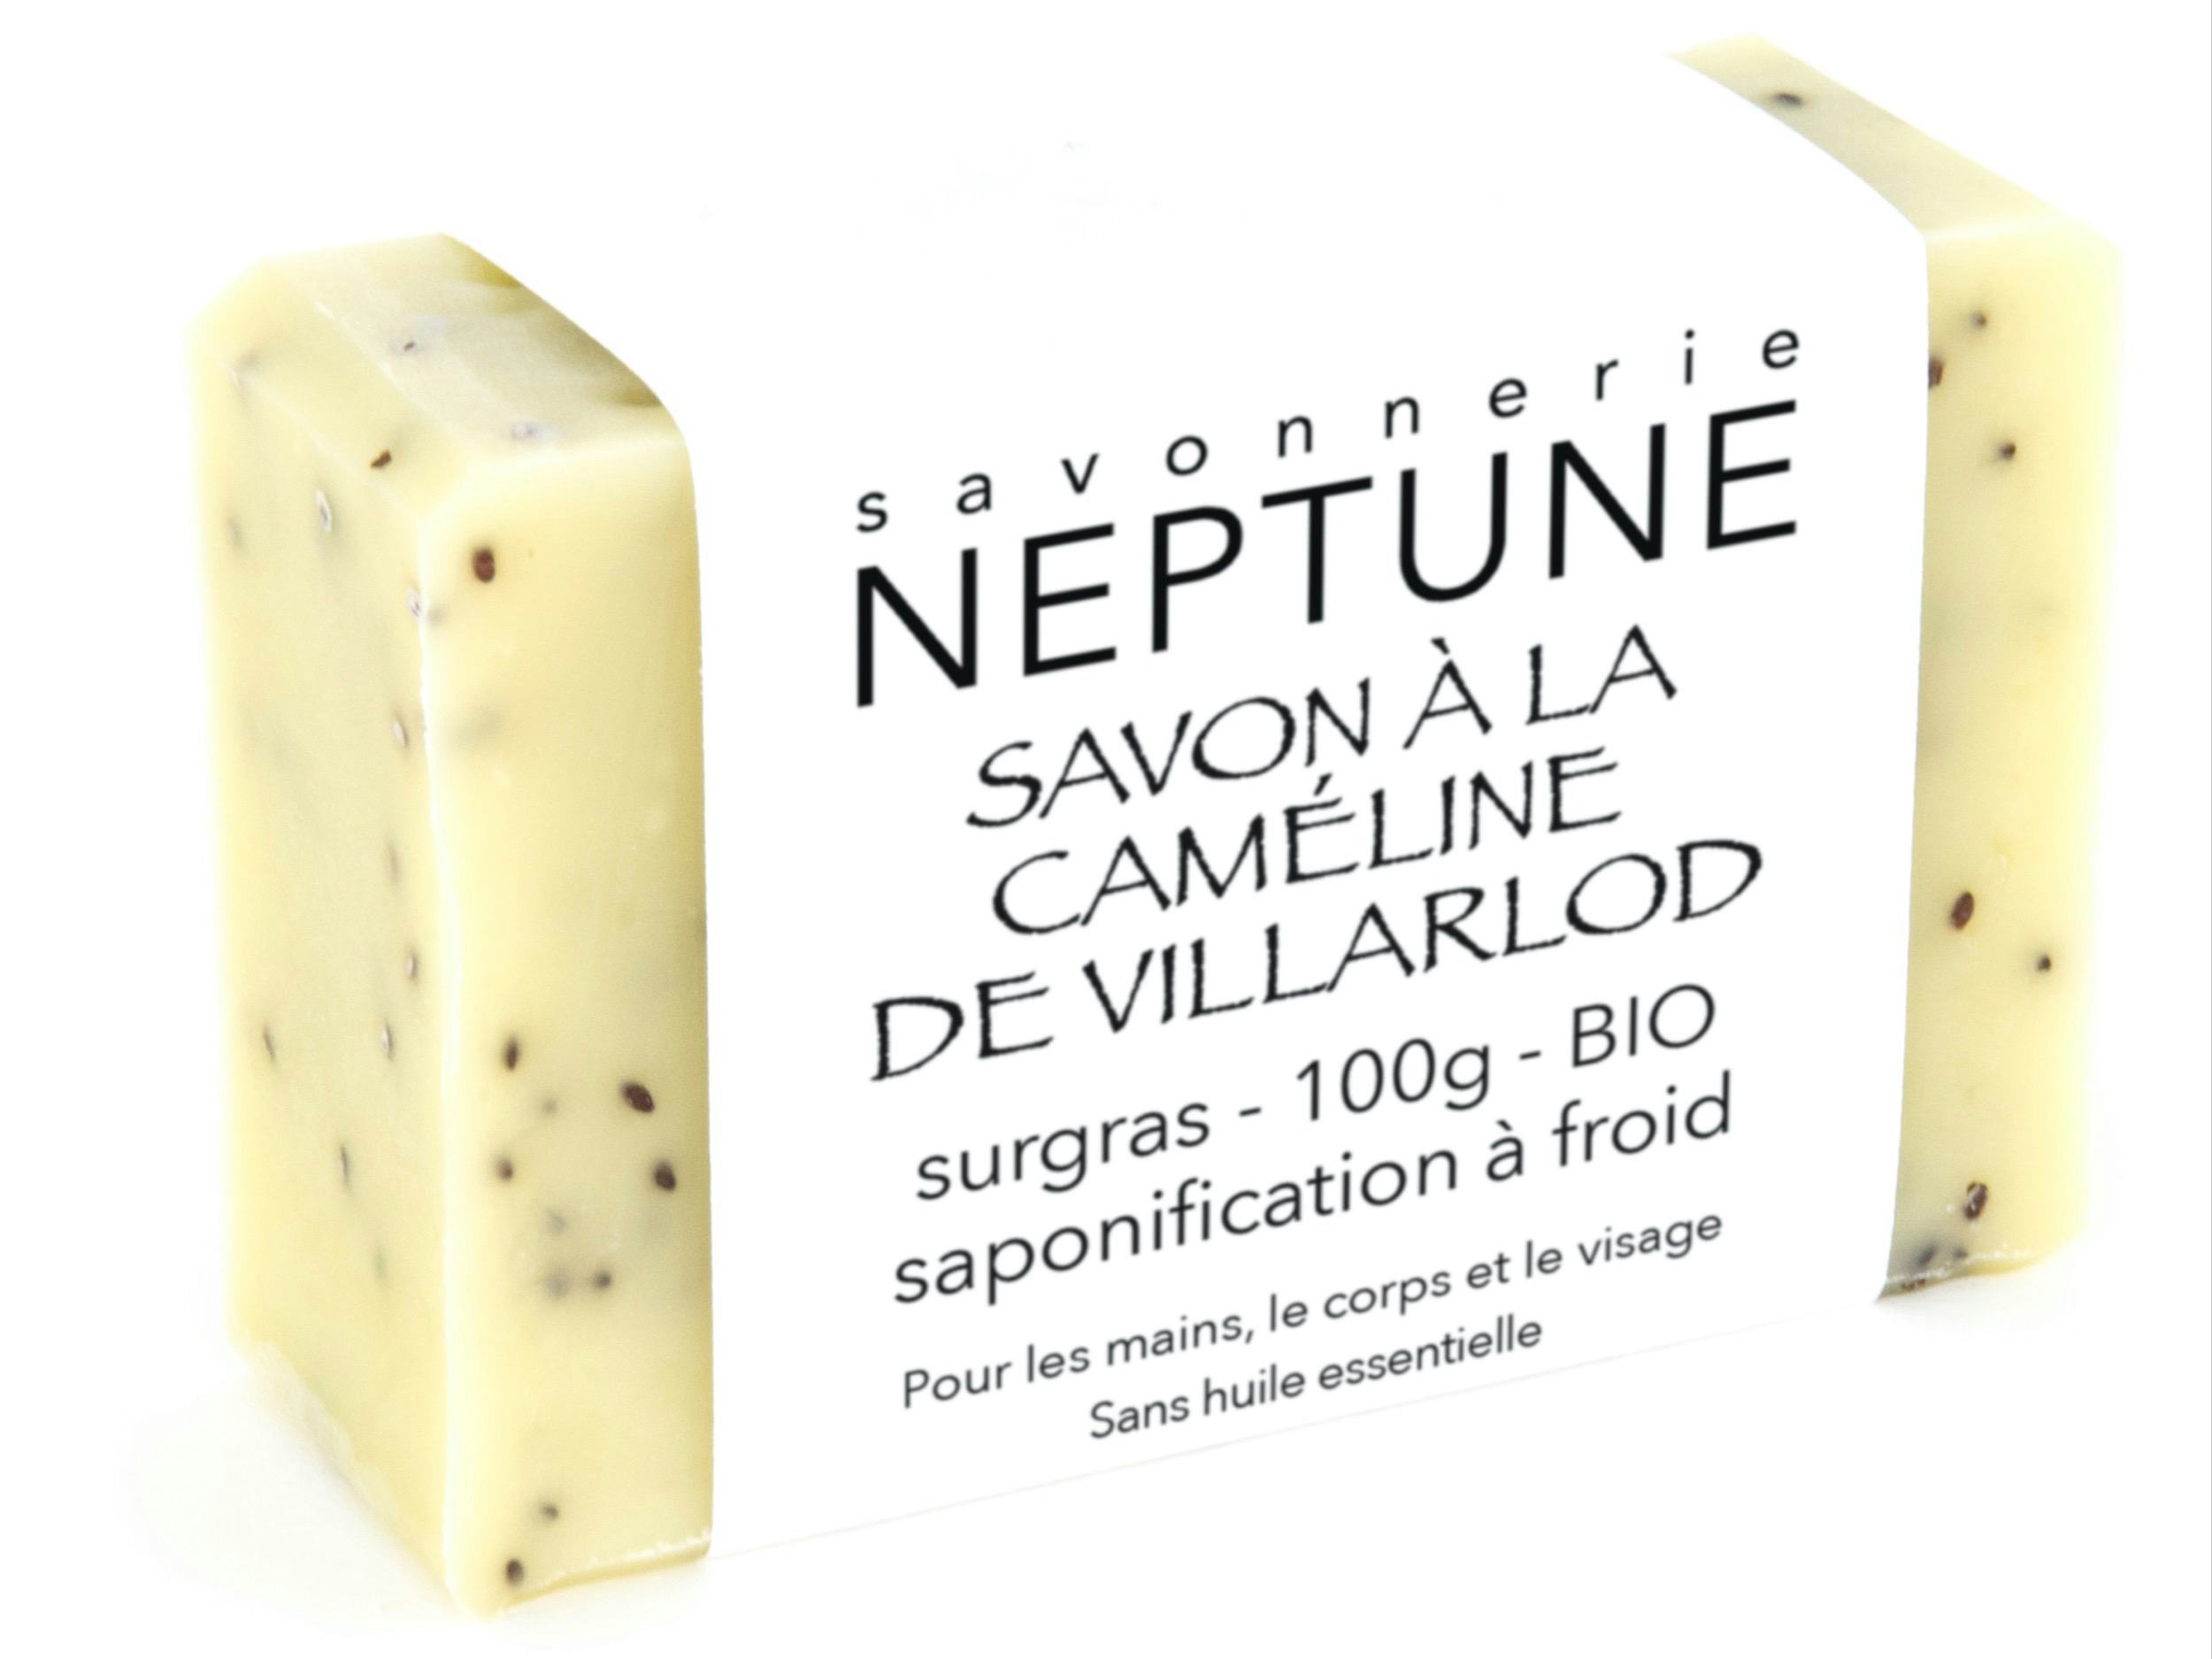 Camelina soap from Villarlod - organic, Savonnerie NEPTUNE, Crésuz, image 2 | Mimelis